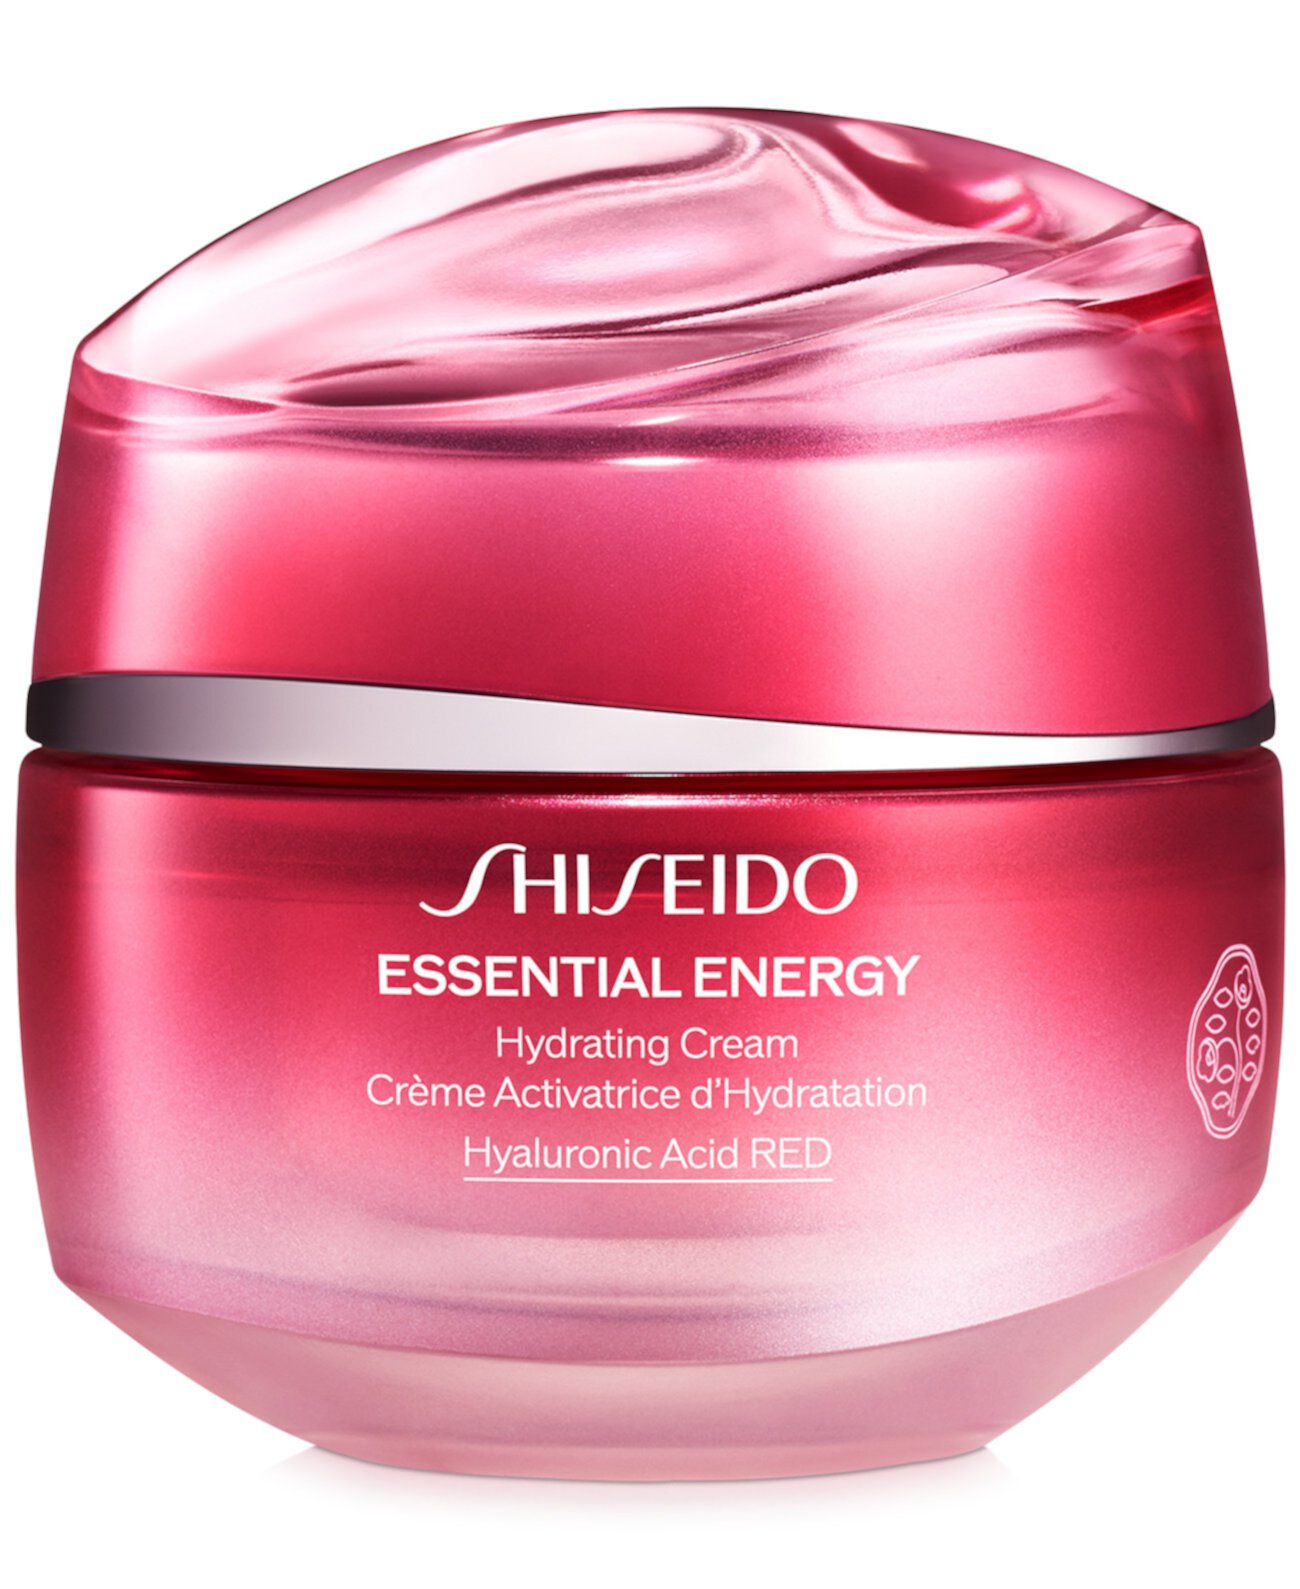 Увлажняющий крем Essential Energy, 1,7 унции. Shiseido